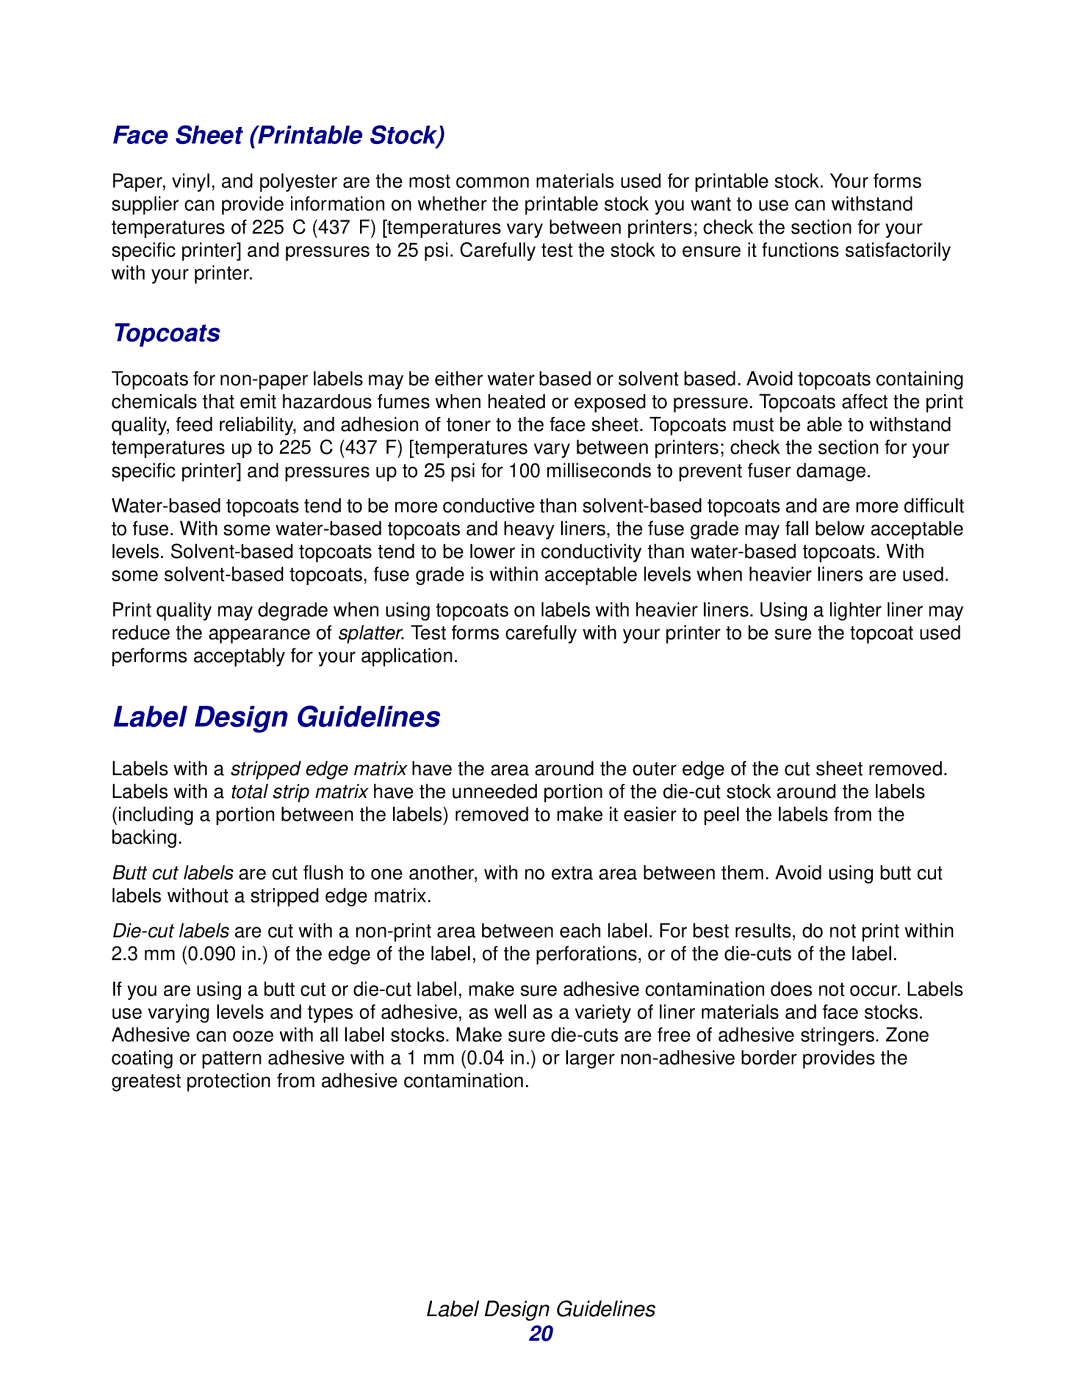 Lexmark Laser Printers manual Label Design Guidelines, Face Sheet Printable Stock, Topcoats 